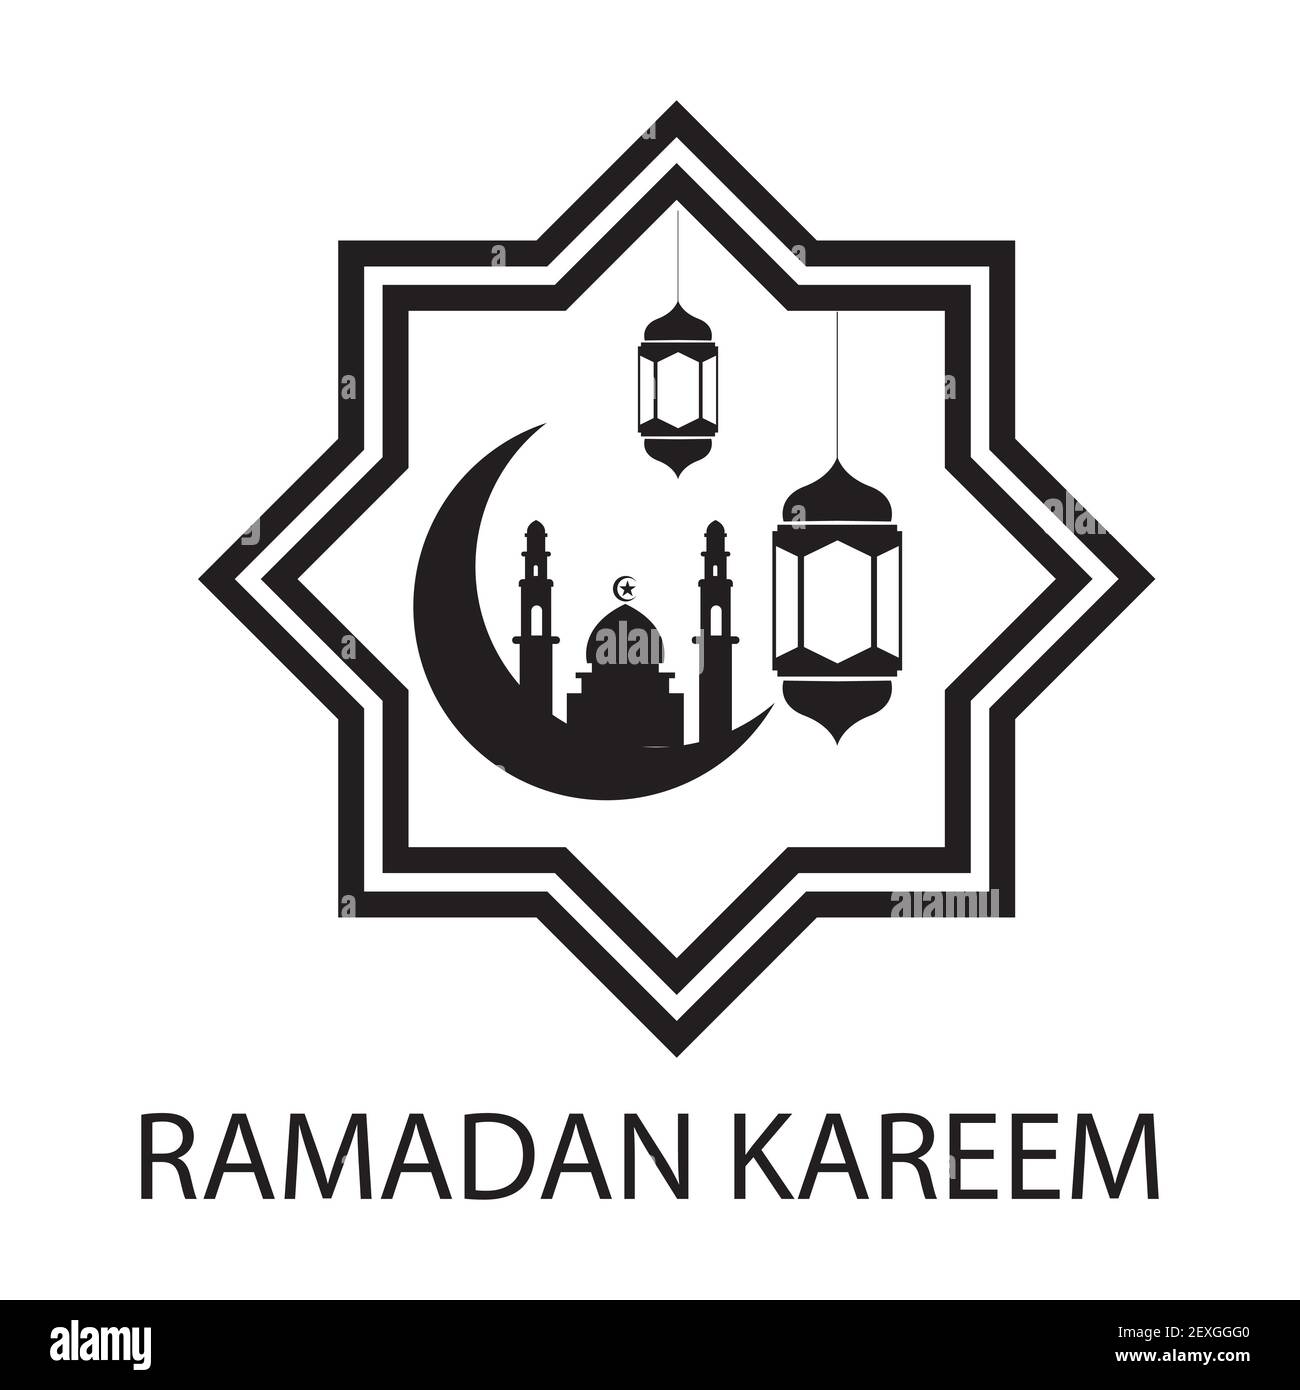 Vector Illustration Of Marhaban Ya Ramadhan Stock Vector Image And Art